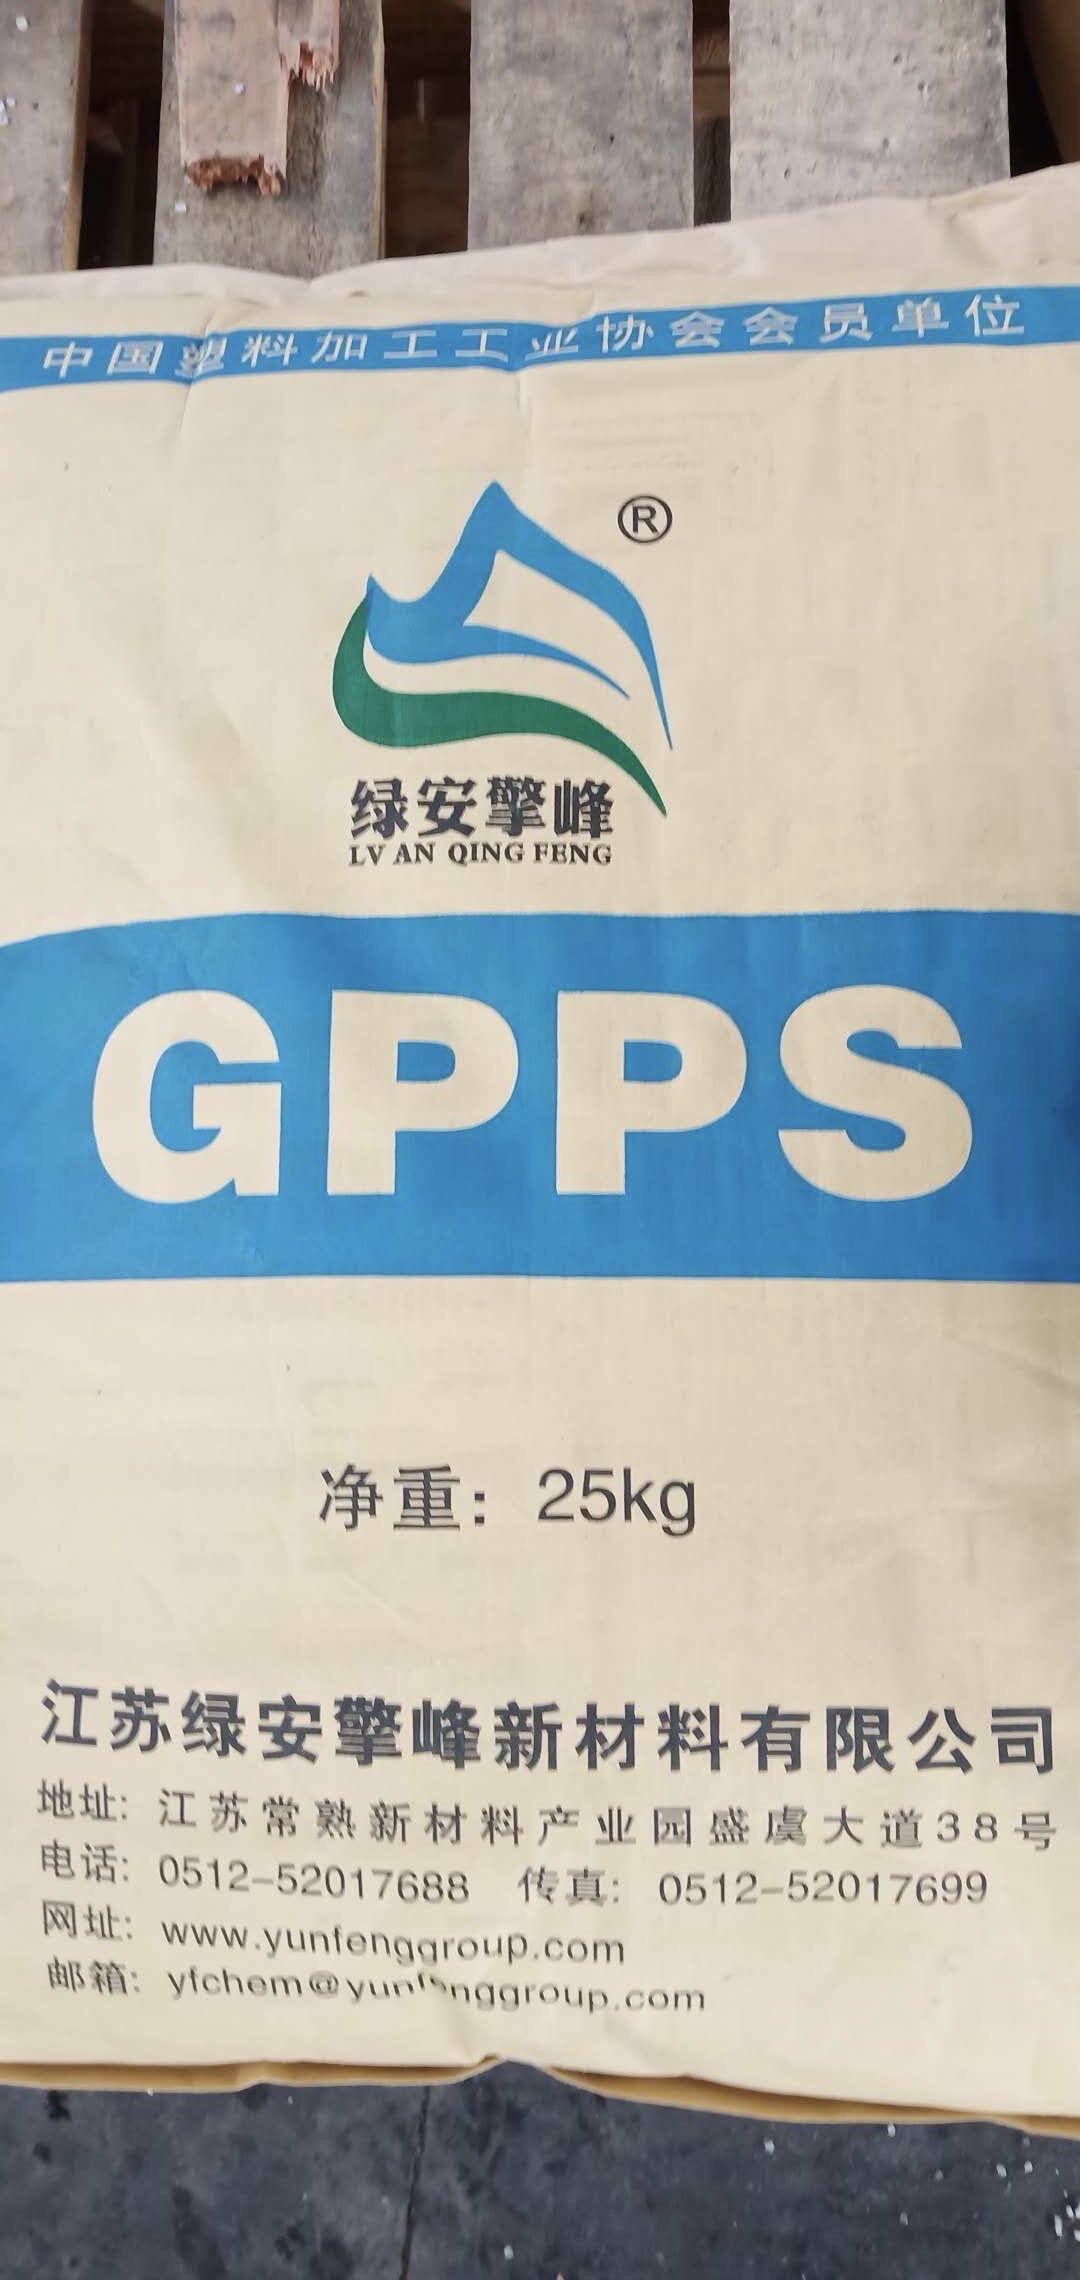 GPPS 绿安擎峰 GP-525 透明级1